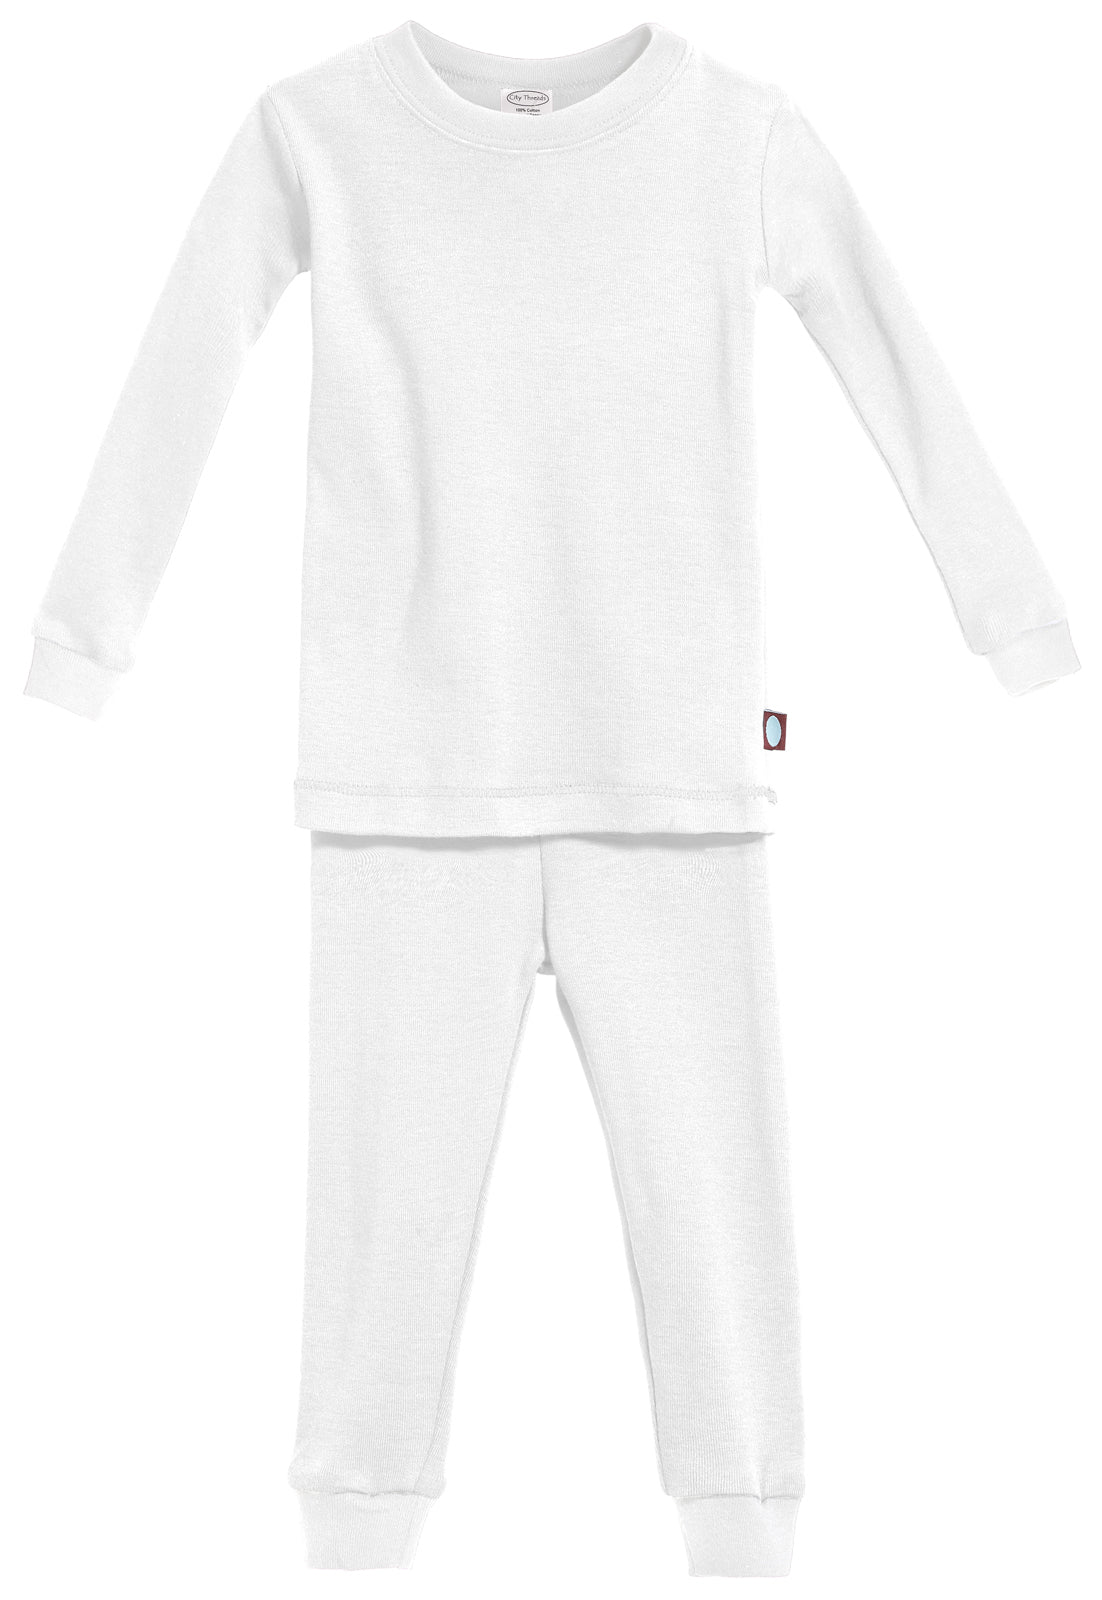 Boys and Girls Soft Organic Cotton Snug Fit Pajama Sets | White